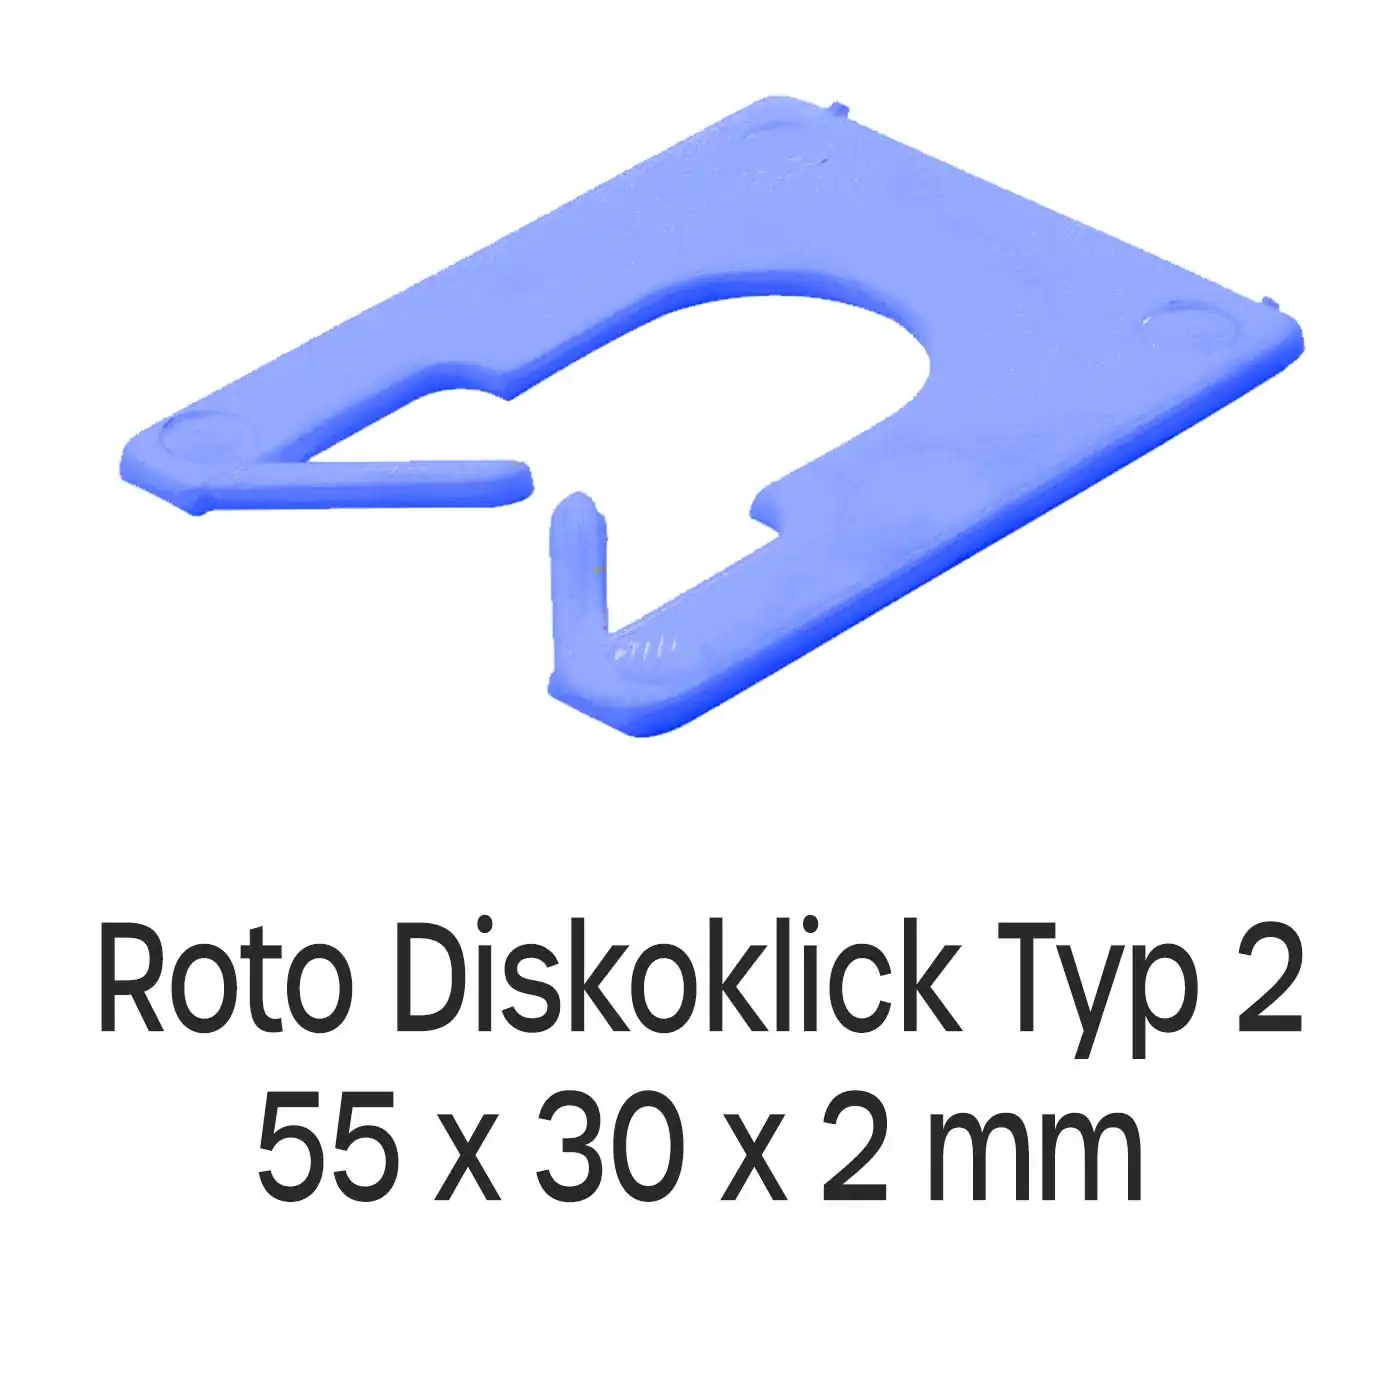 Distanzplatten Roto Diskoklick Typ 2 55 x 30 x 2 mm 1000 Stück